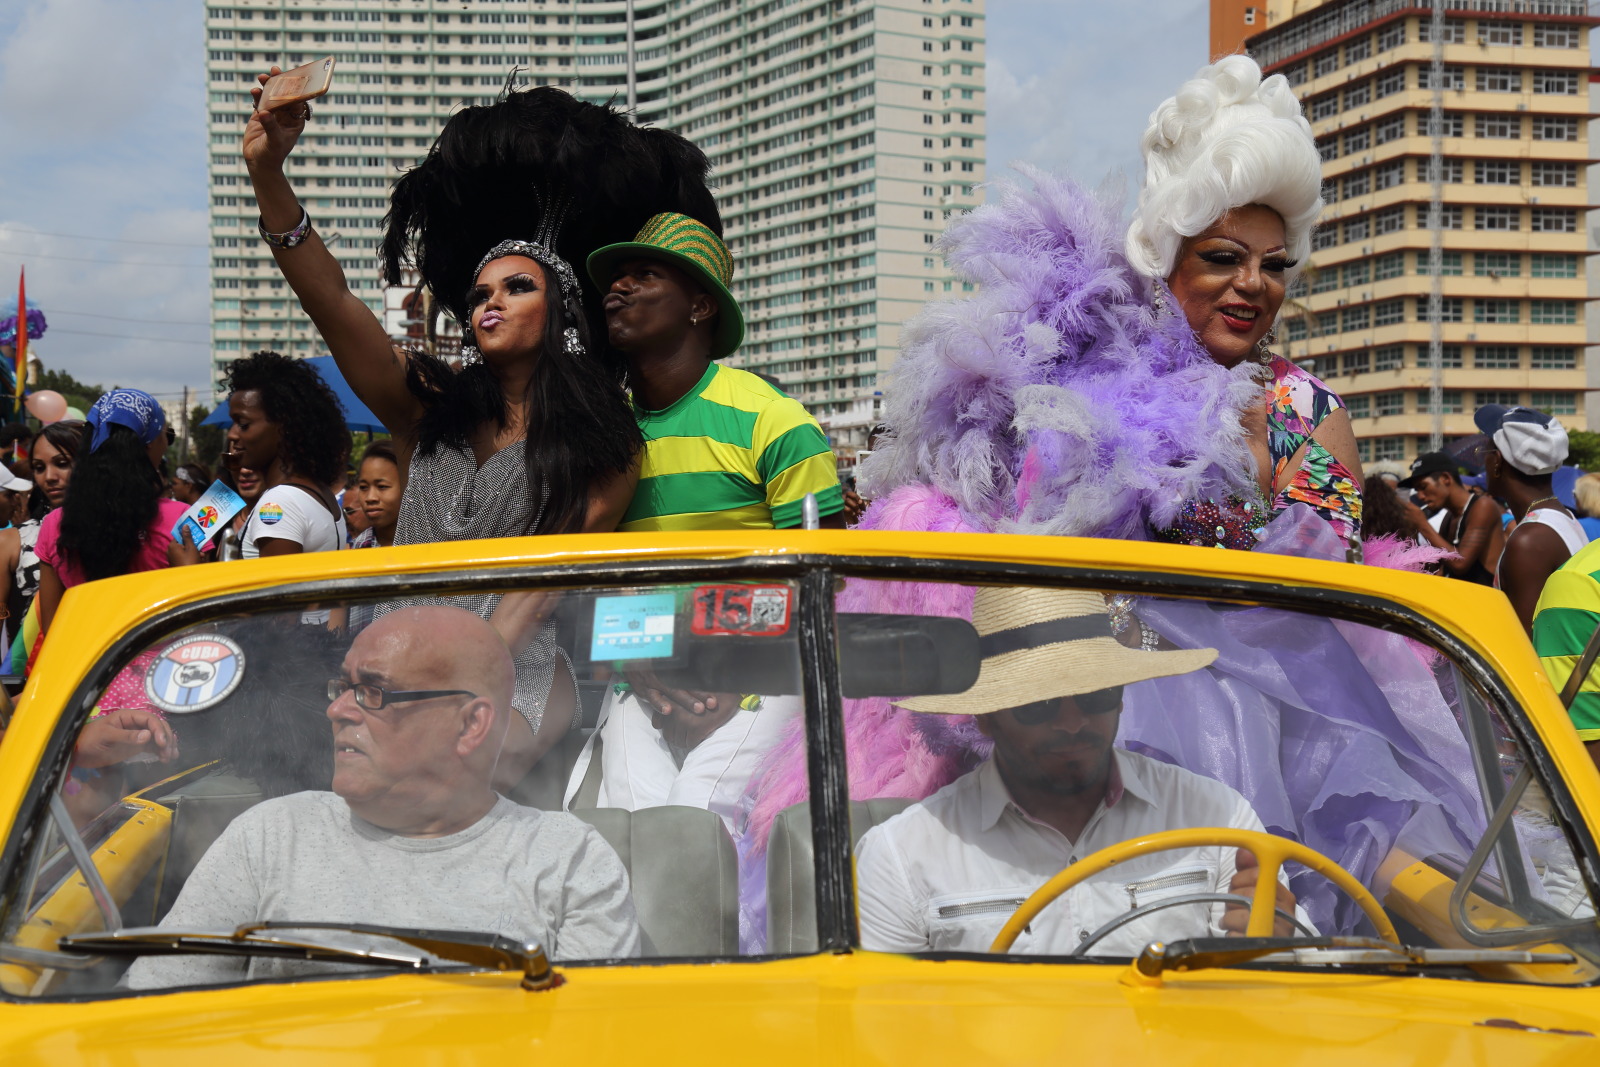 Havana’s 2017 Parade against Homophobia